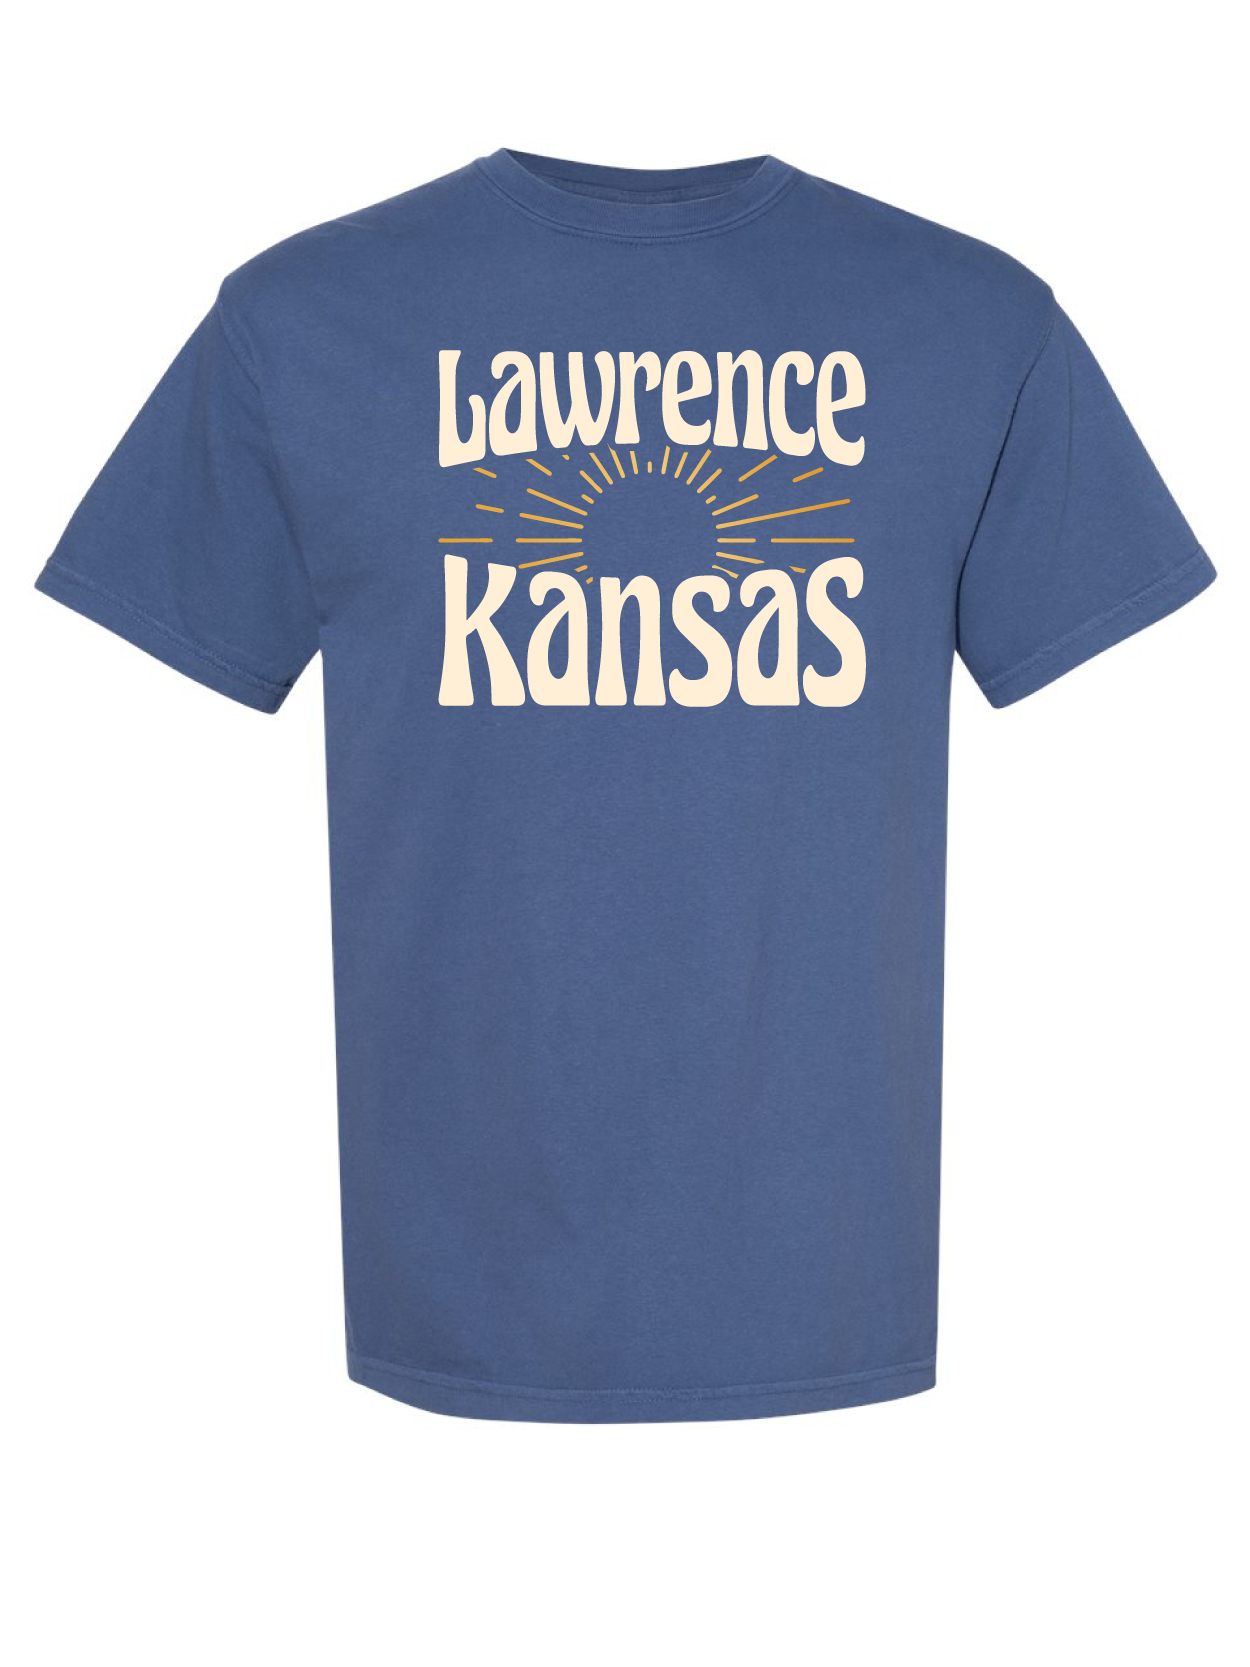 Lawrence Kansas Rays